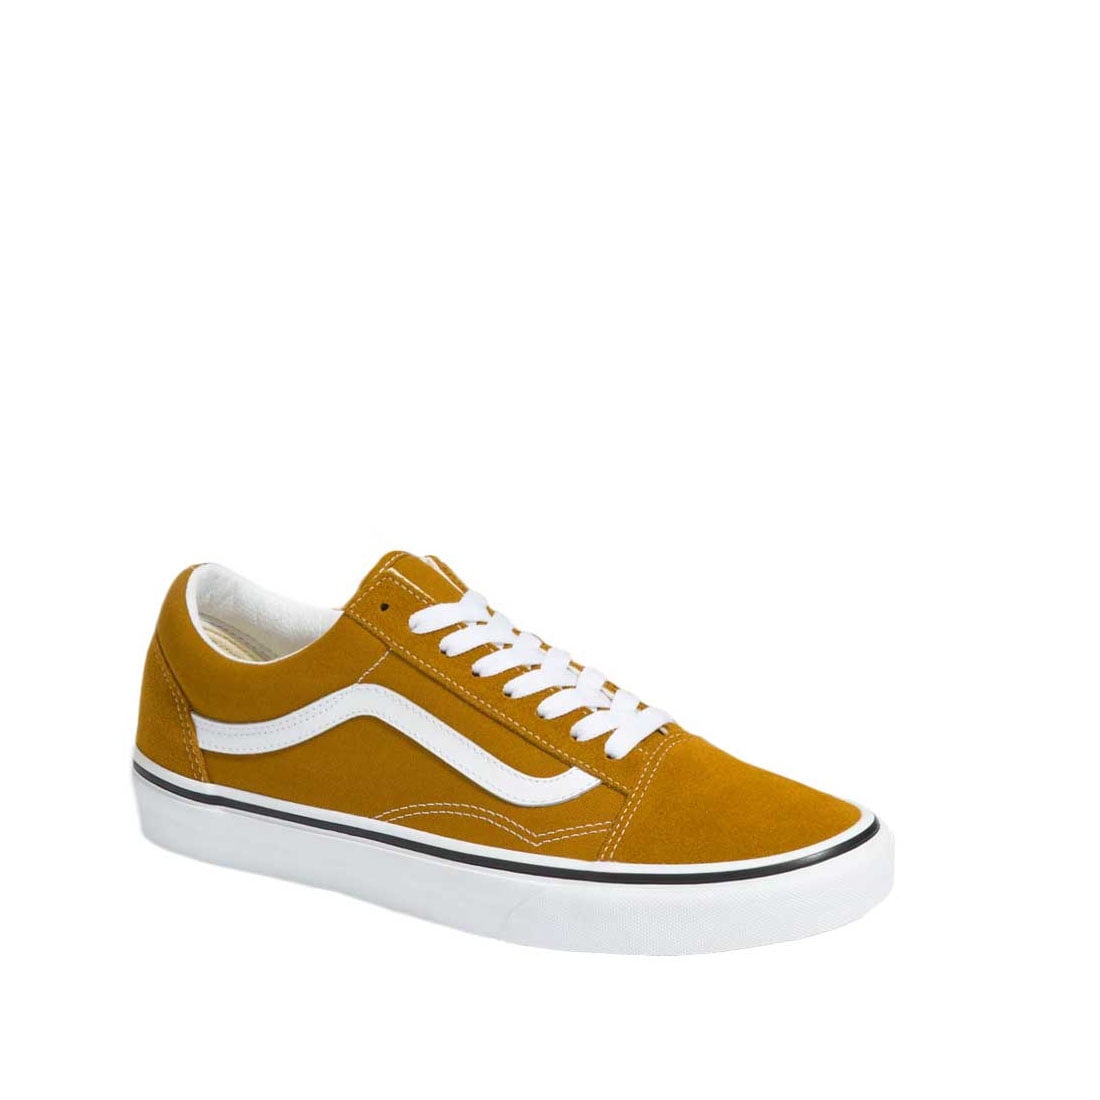 Vans Old Skool Unisex/Adult shoe size 7 